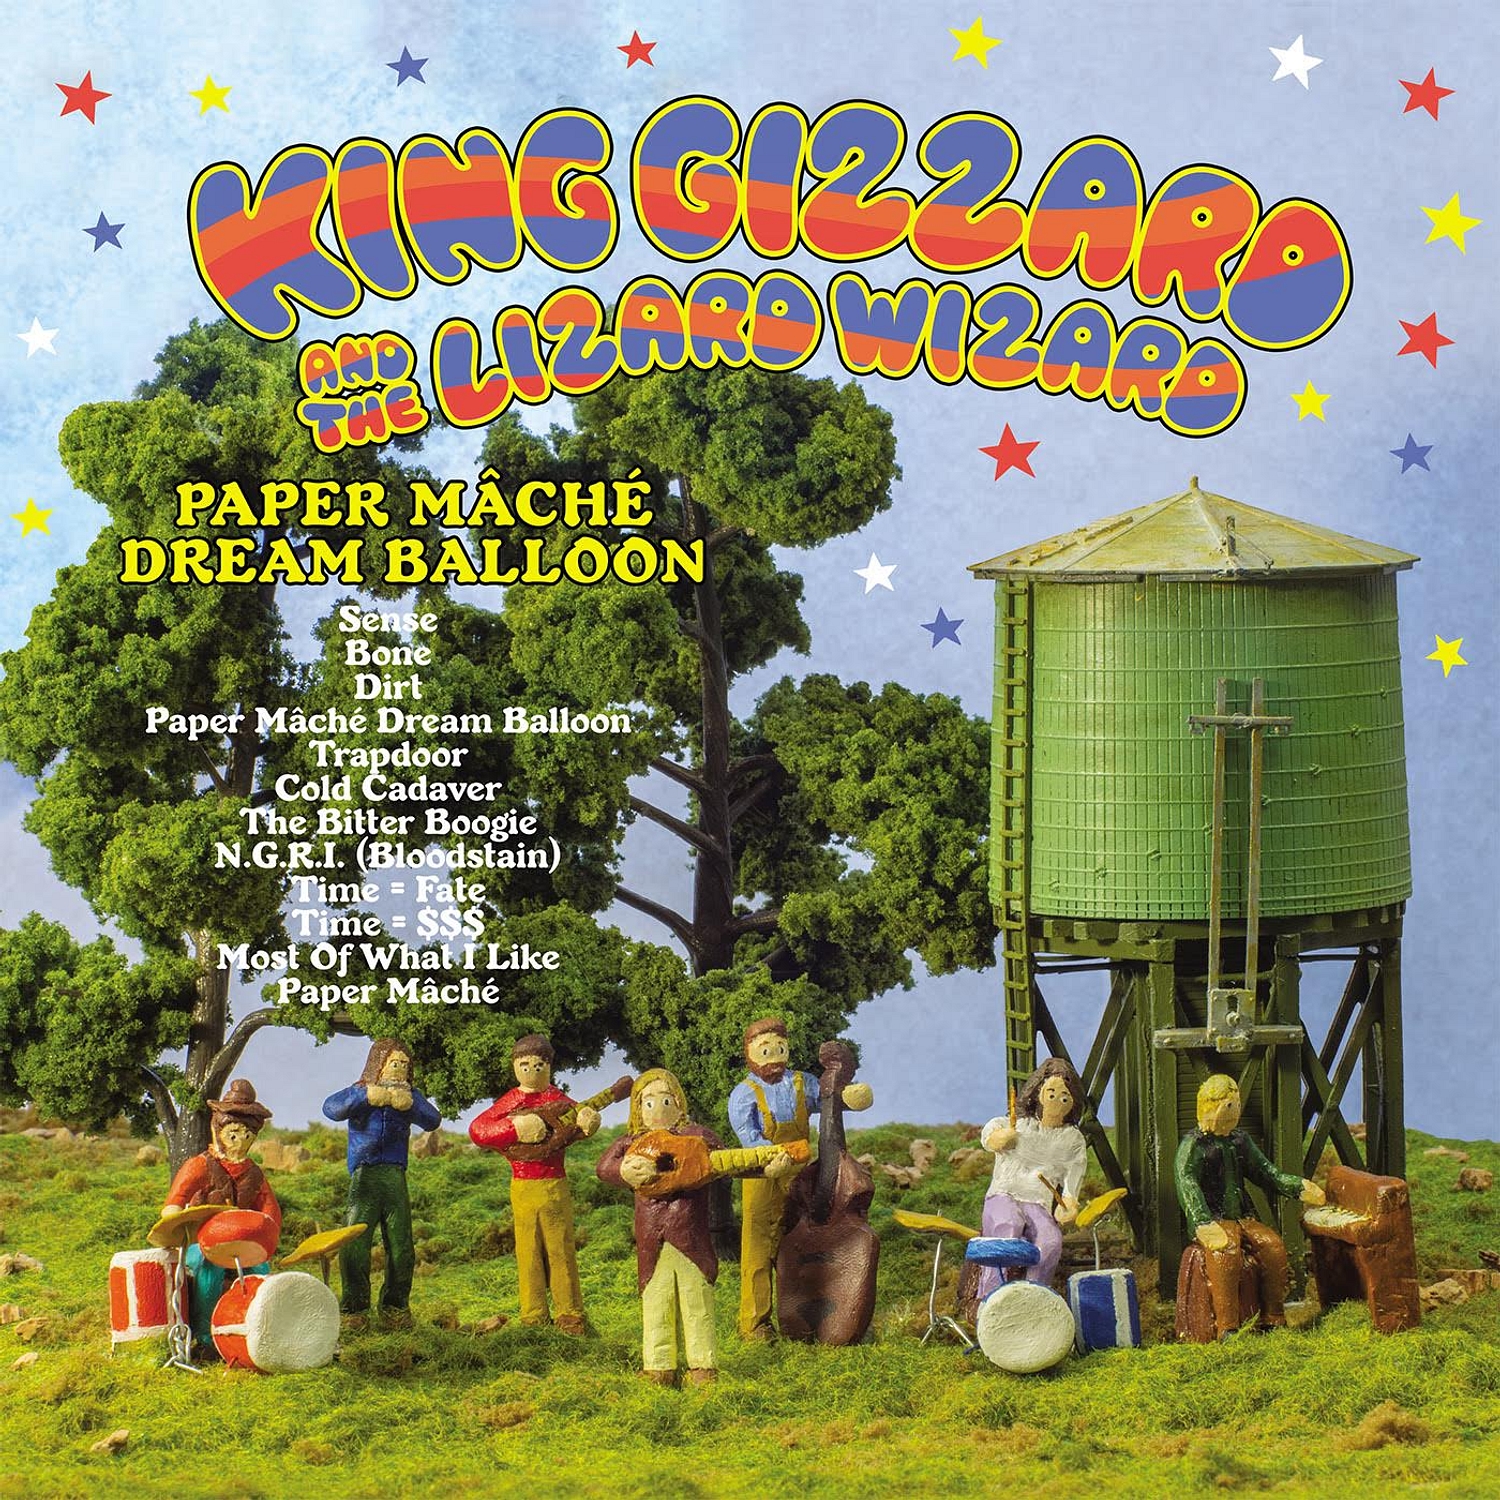 King Gizzard & The Lizard Wizard announce new acoustic album 'Paper Mâché Dream Balloon'